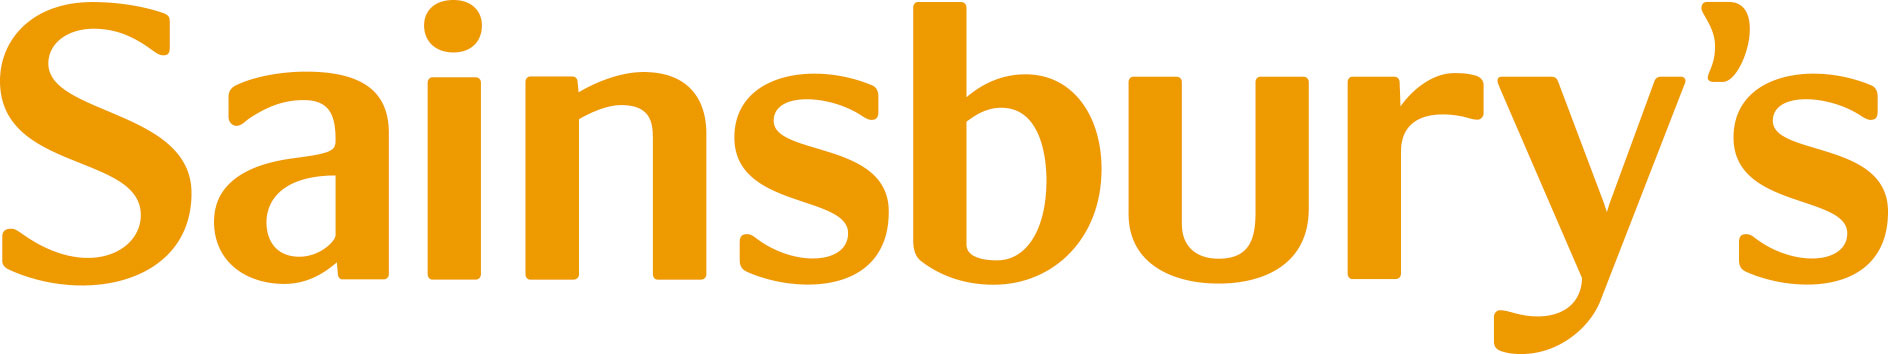 sainburys logo unofficial 